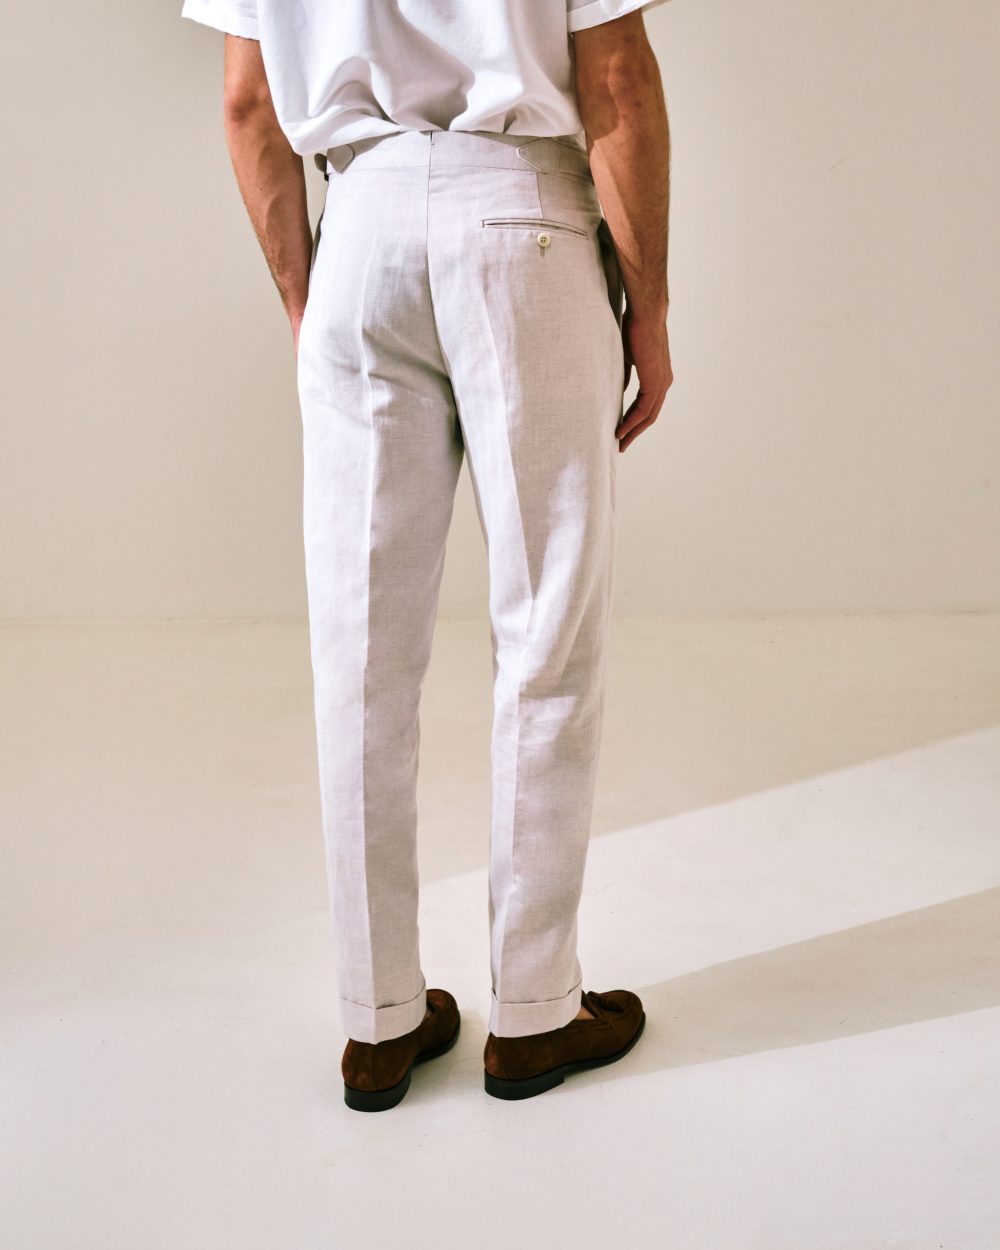 S3 One Pleat Trousers / Herringbone Cotton Linen